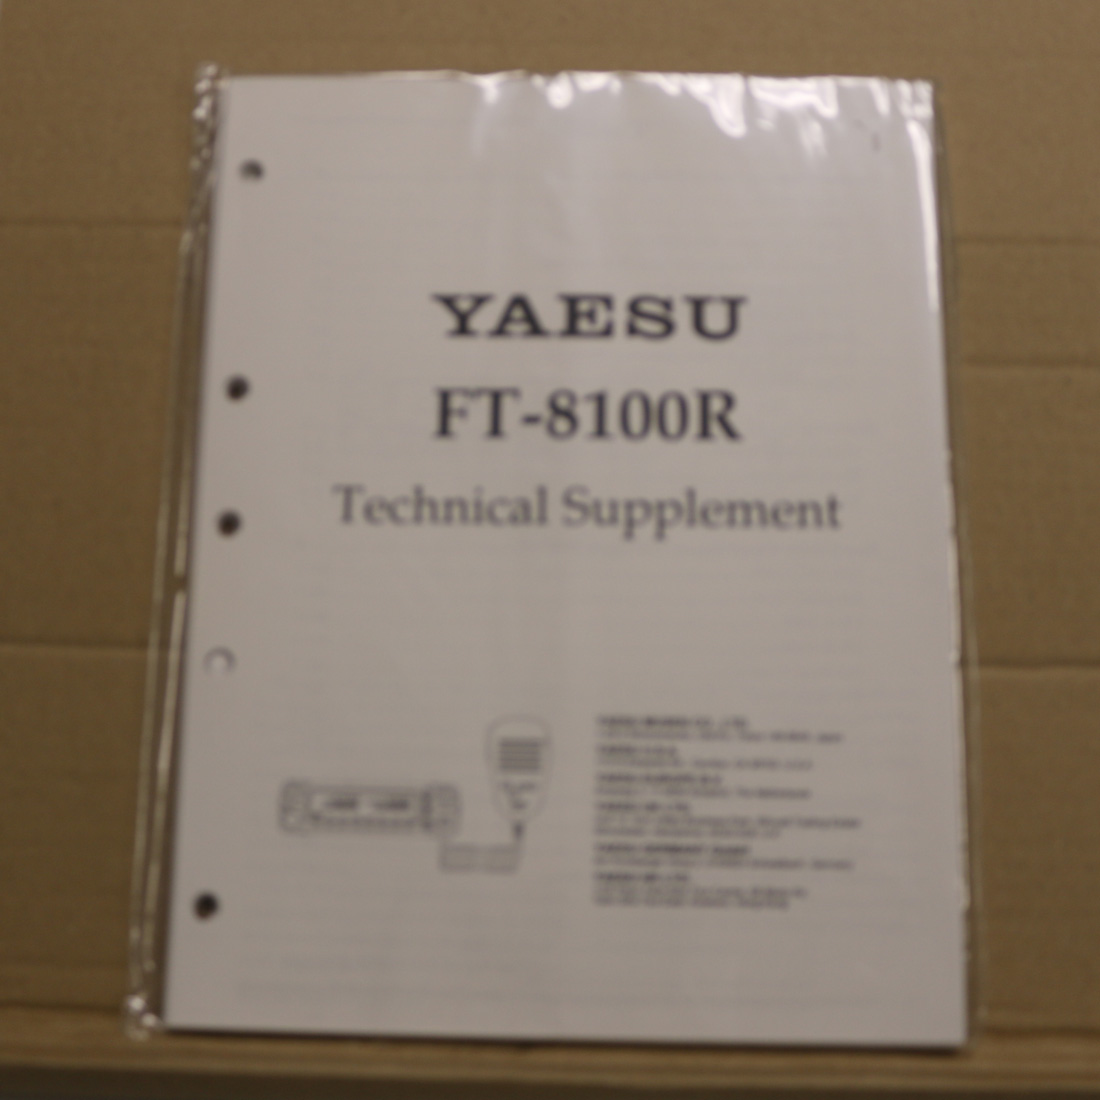 Yaesu FT-8100R Technical Supplement